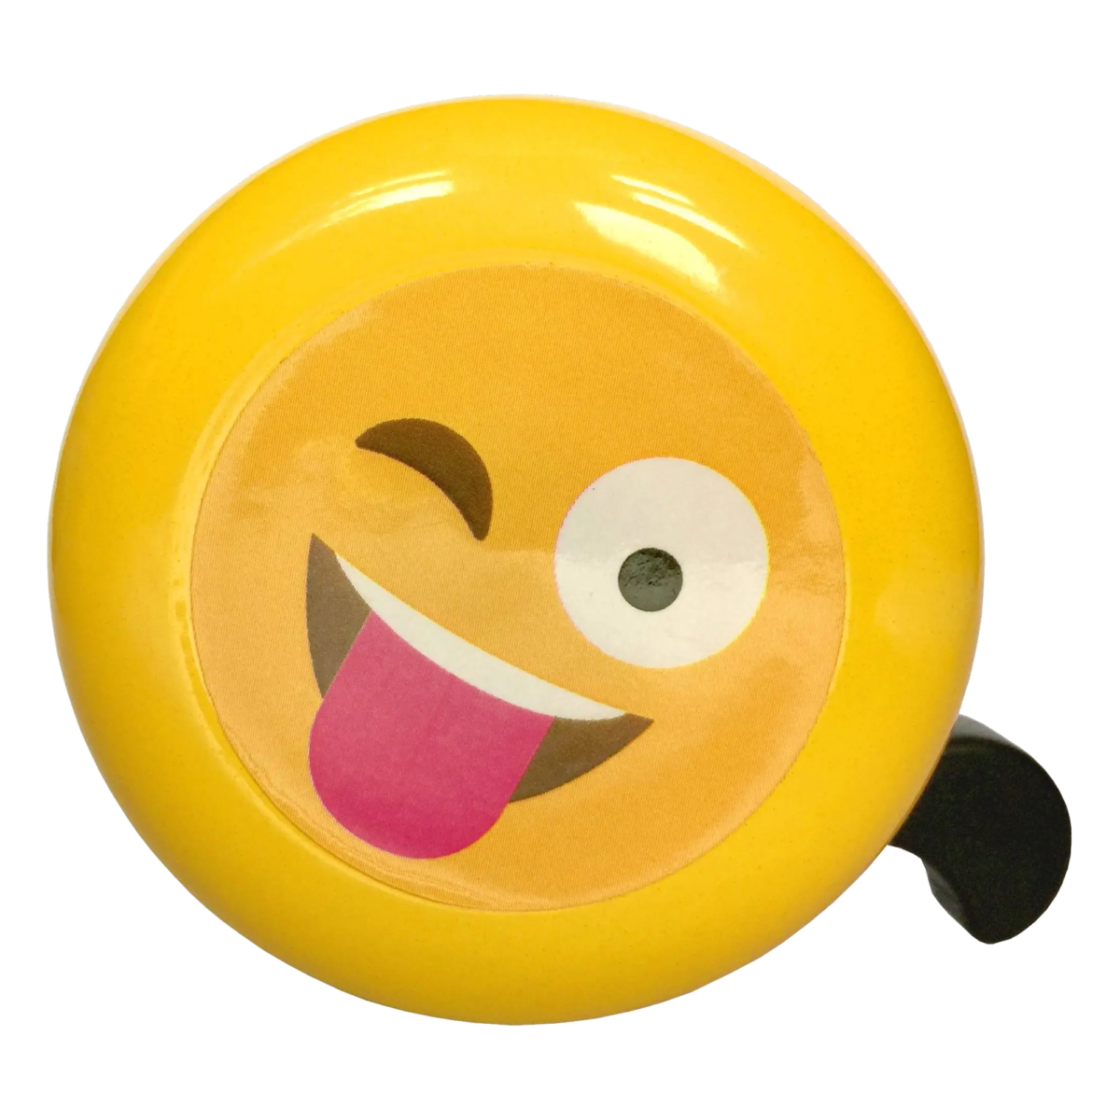 bike bell yellow emoji face winking